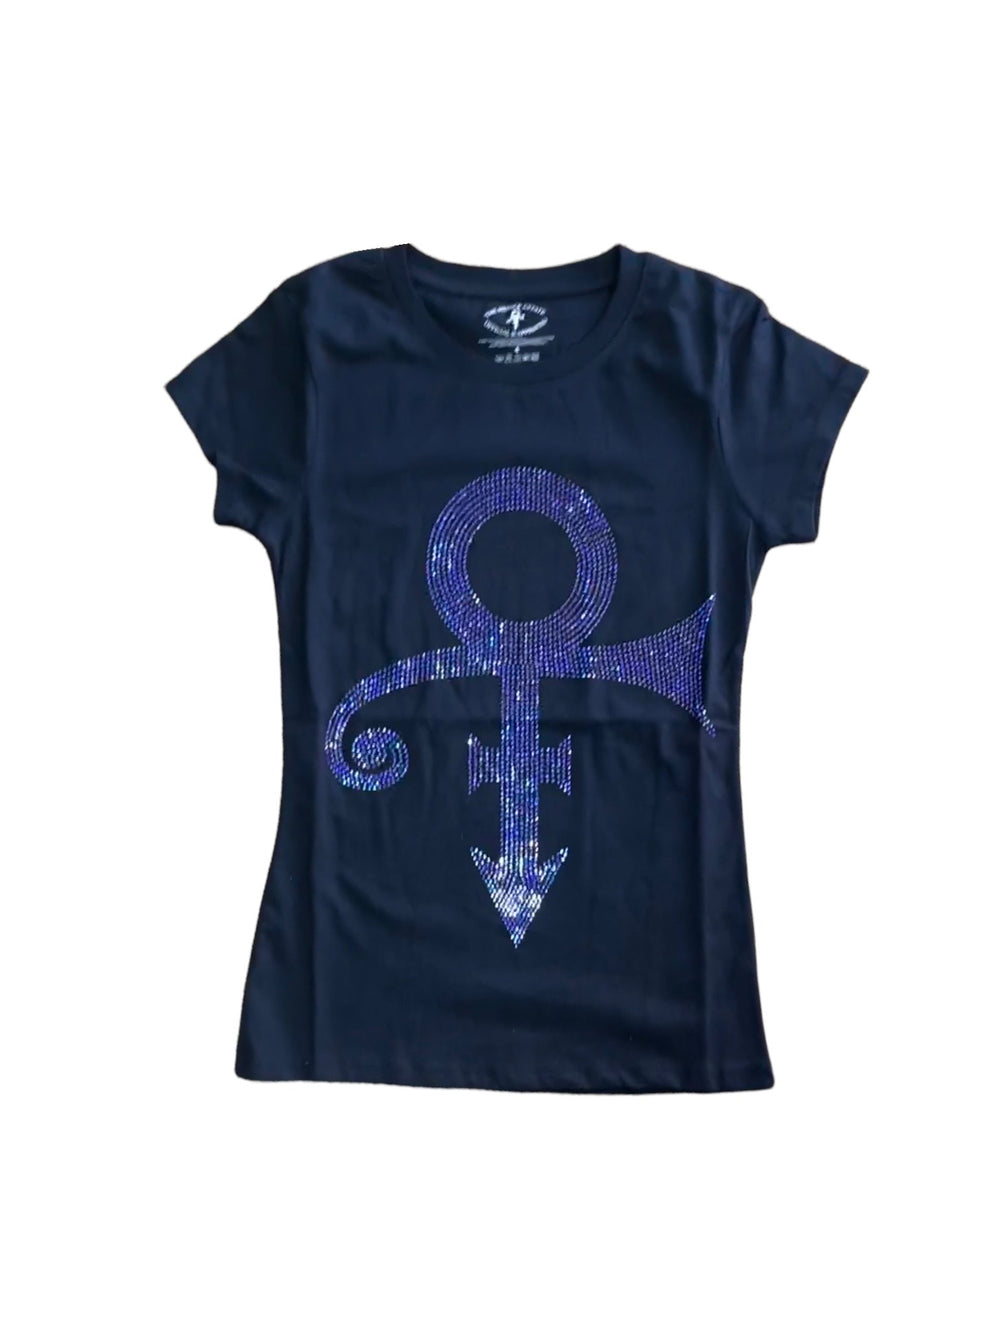 Prince – Official PURPLE Love Symbol Diamante Ladies Slim Fit T-Shirt NEW